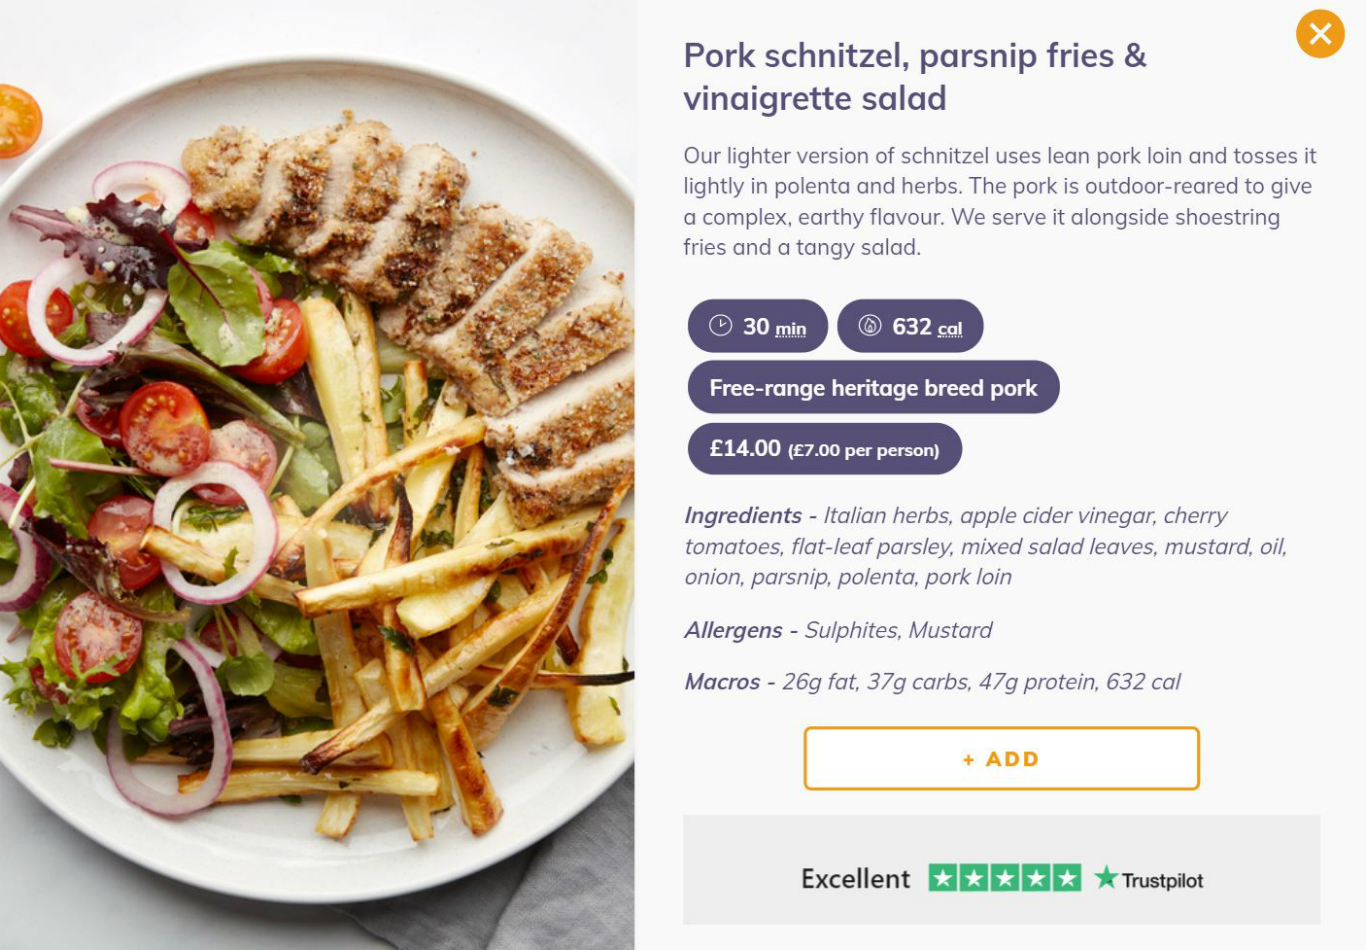 Pork schnitzel (Image: Mindful Chef)